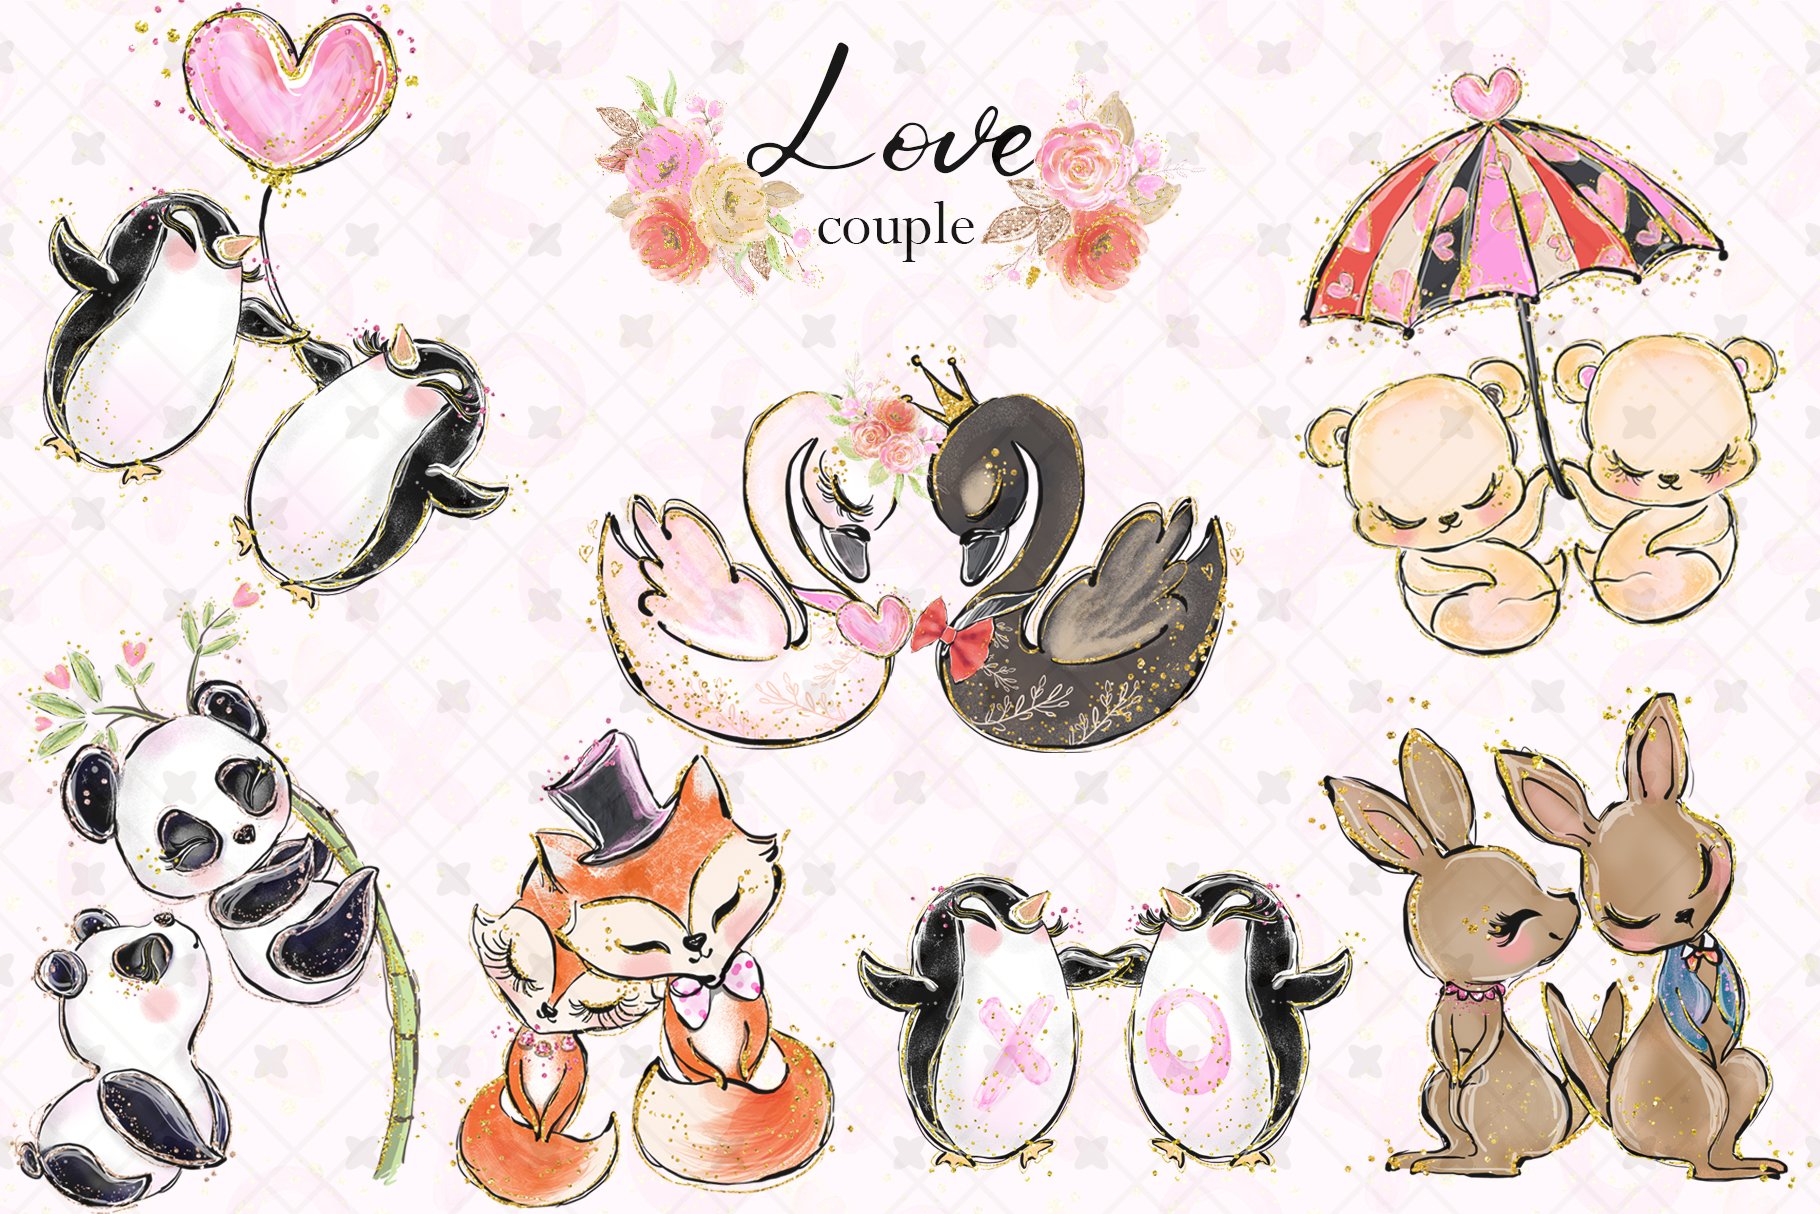 Cute animal love couples.